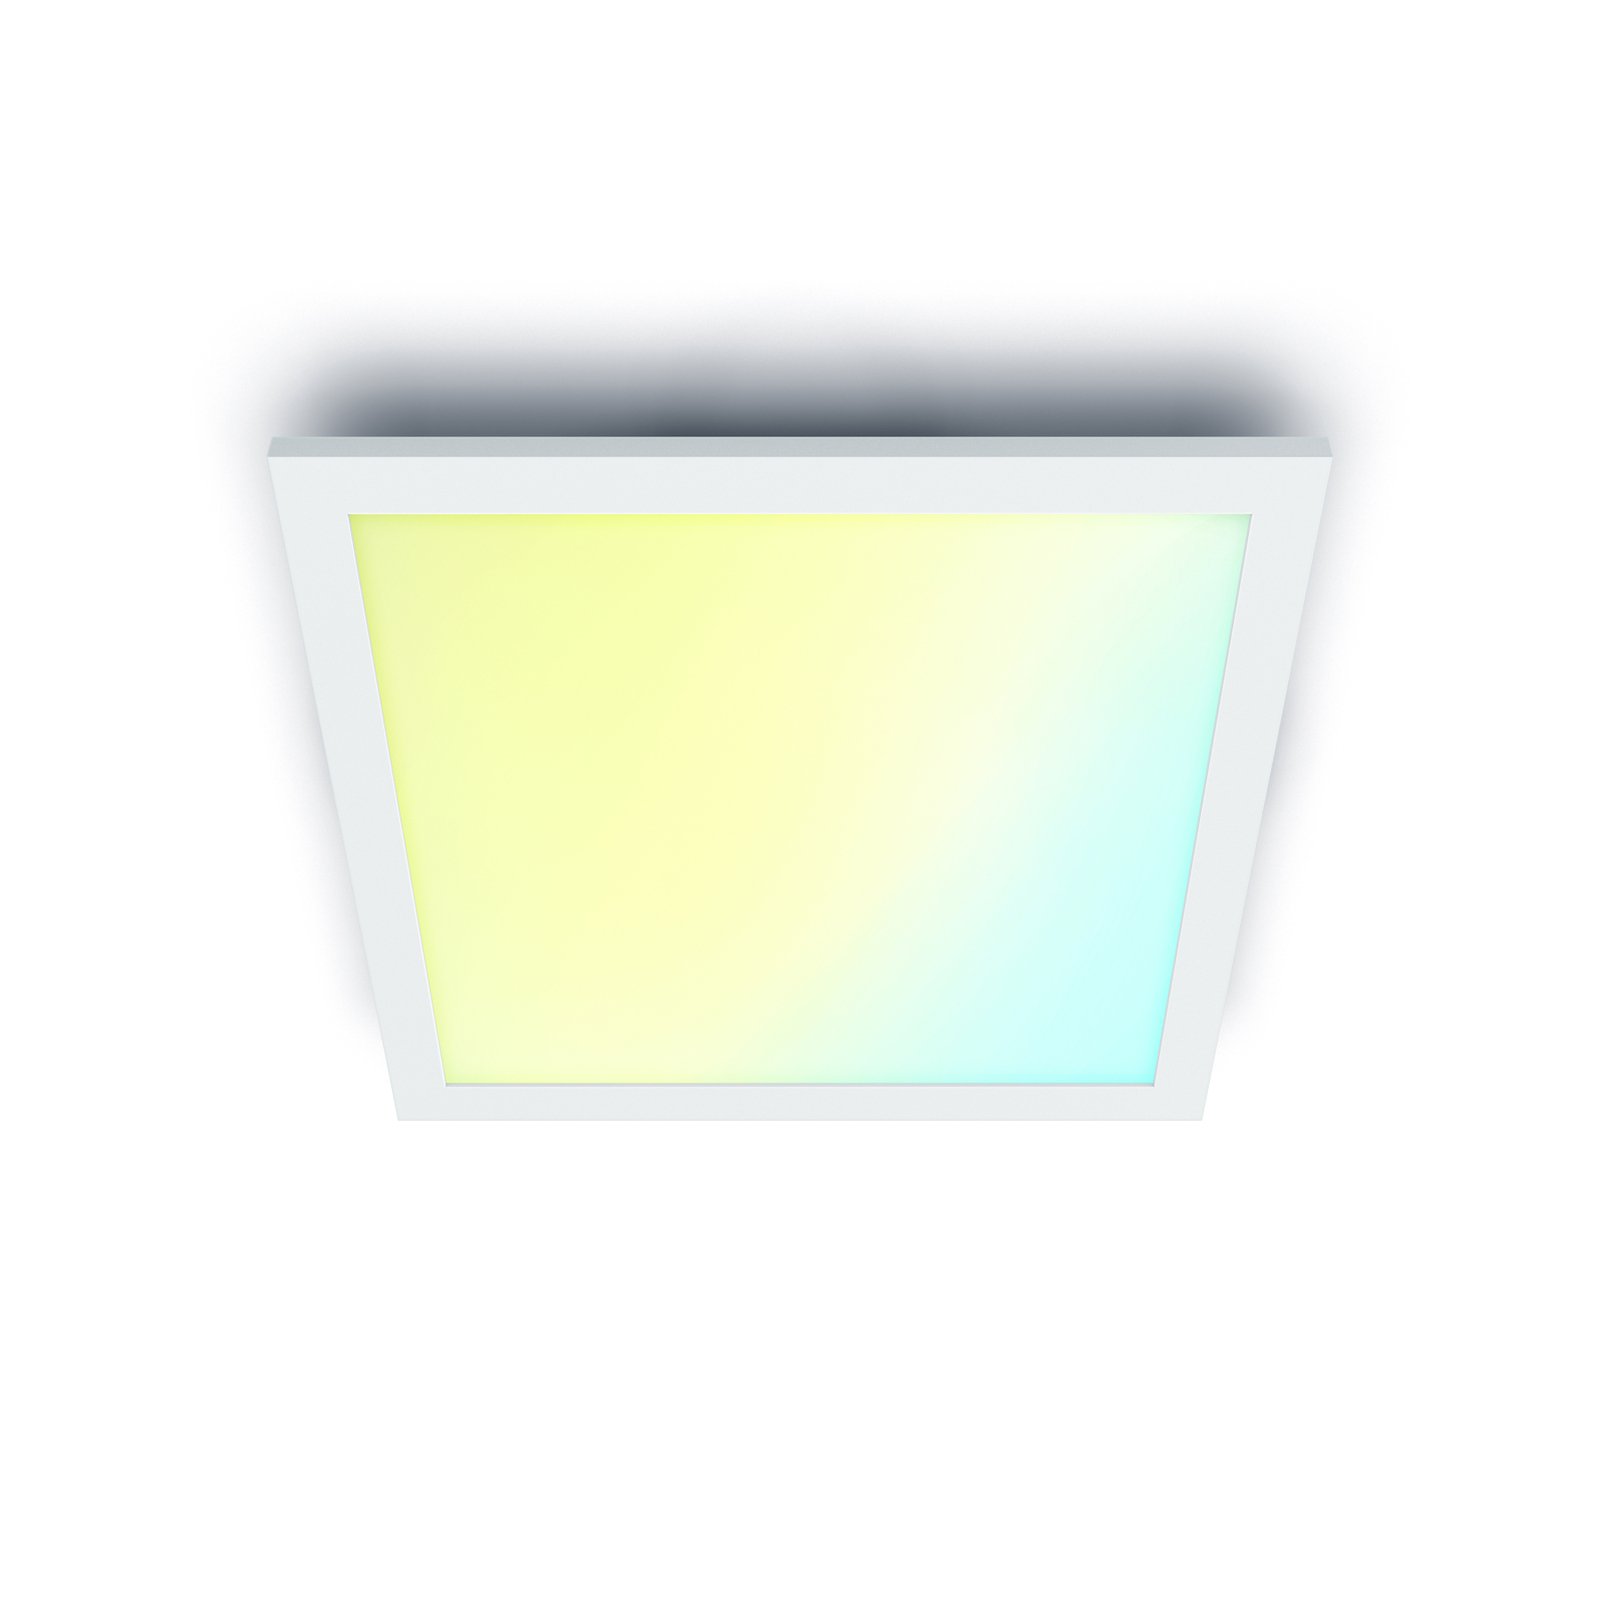 WiZ plafonnier LED panneau, blanc, 60x60 cm